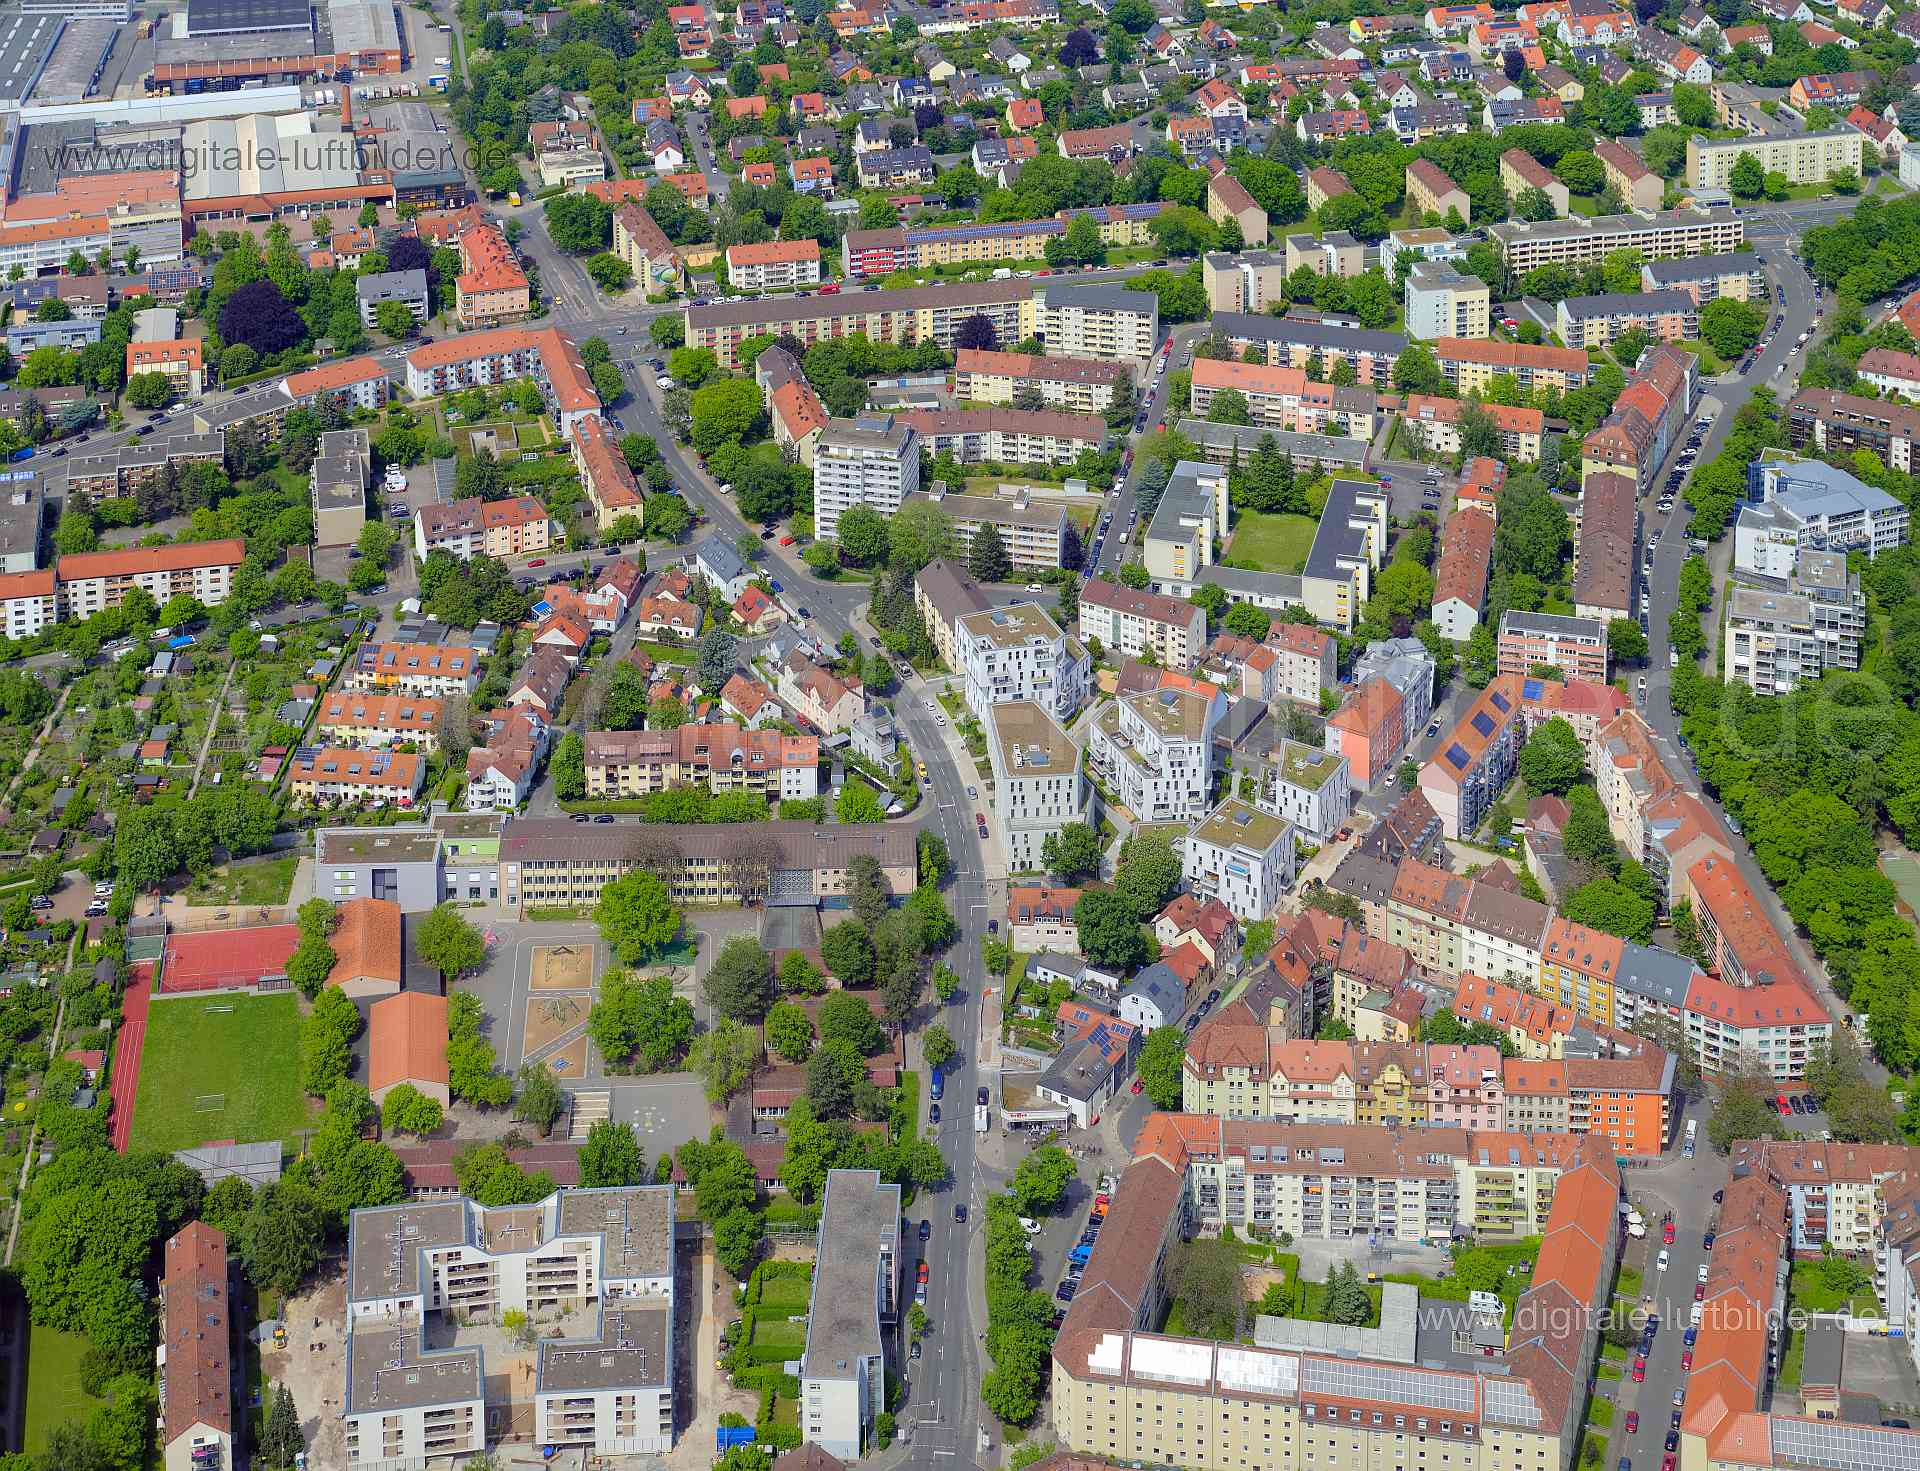 Luftbild - Gärten hinter der Veste, Ort: Nürnberg, Tags: Gärten hinter der Veste, Friedrich-Hegel-Schule, Nordstadt, Carli...